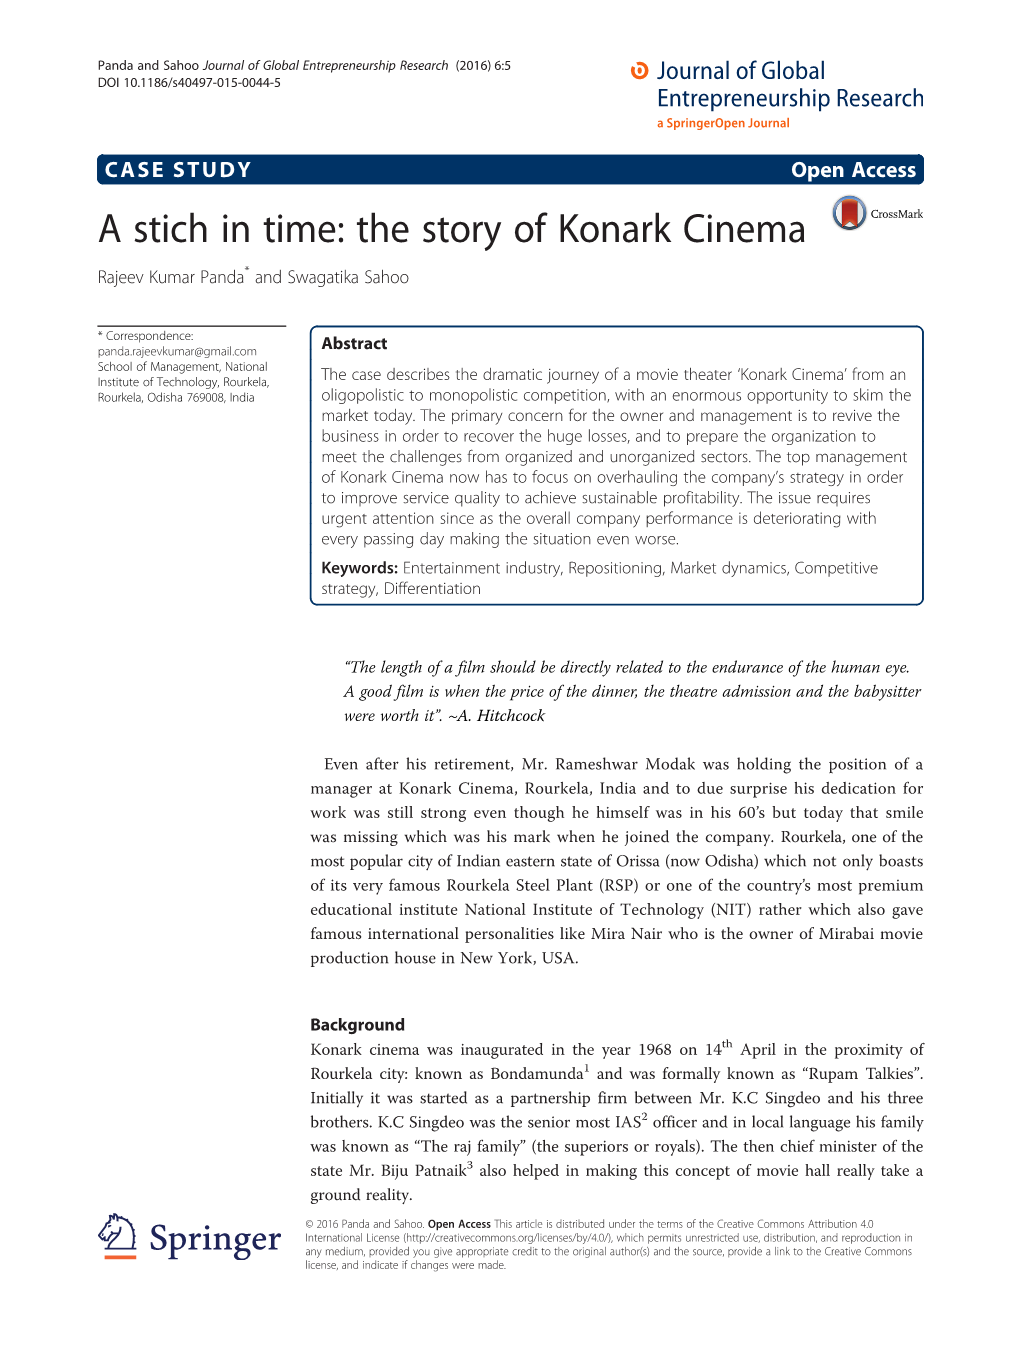 A Stich in Time: the Story of Konark Cinema Rajeev Kumar Panda* and Swagatika Sahoo